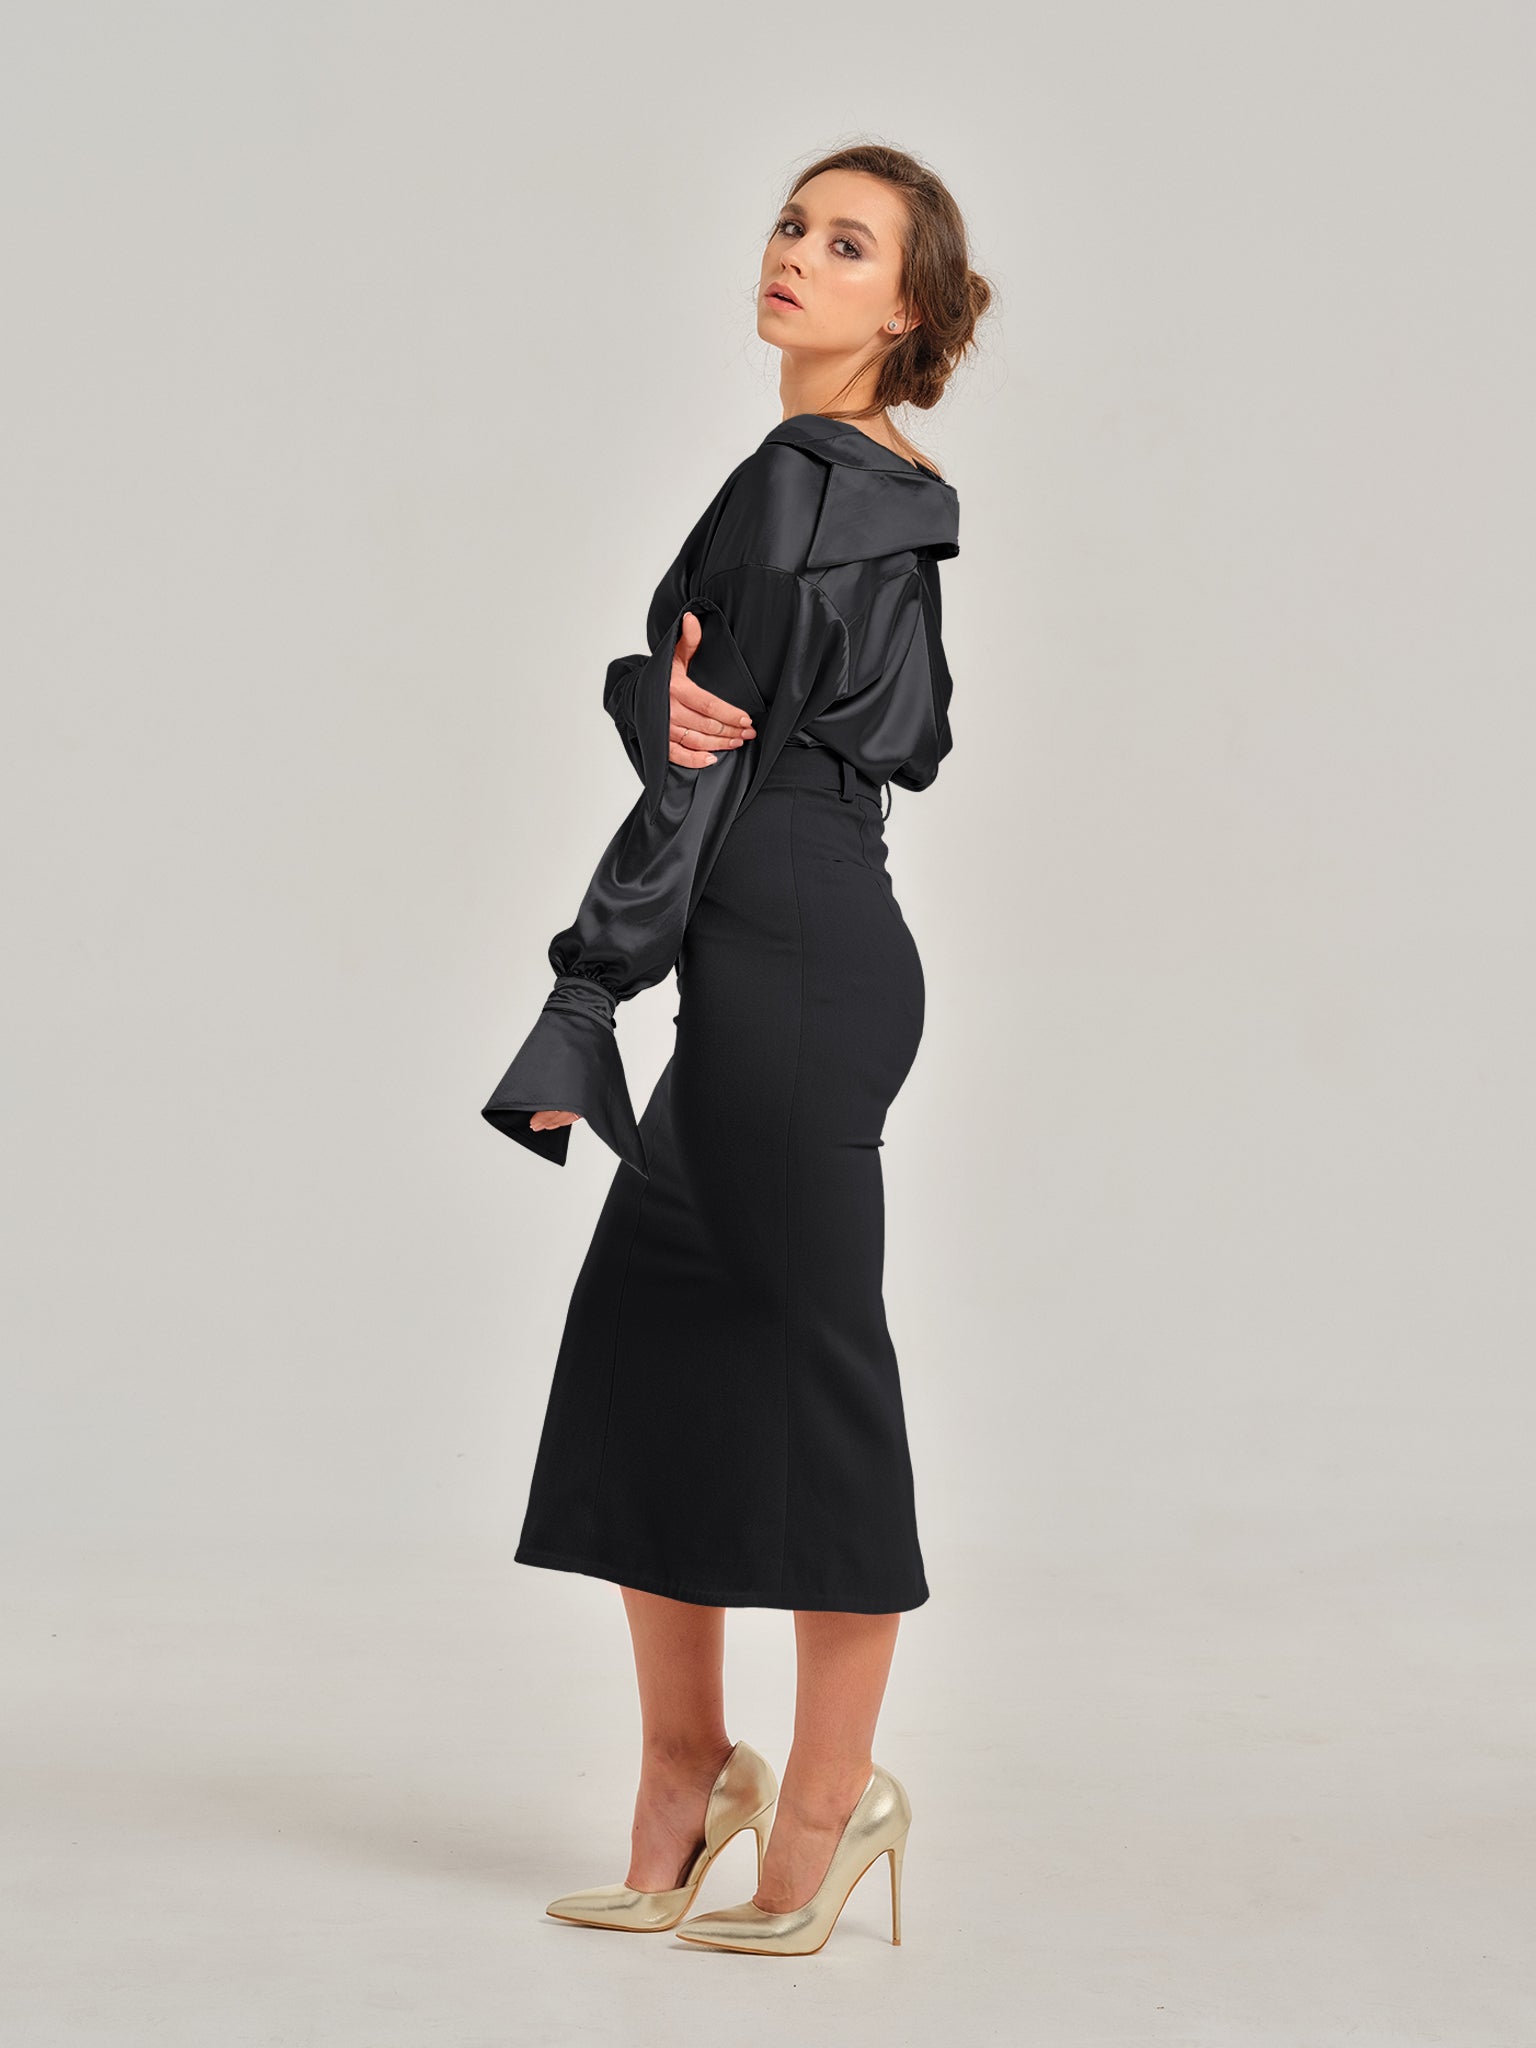 Magnetic Power Trumpet Midi Skirt by Tia Dorraine Women's Luxury Fashion Designer Clothing Brand